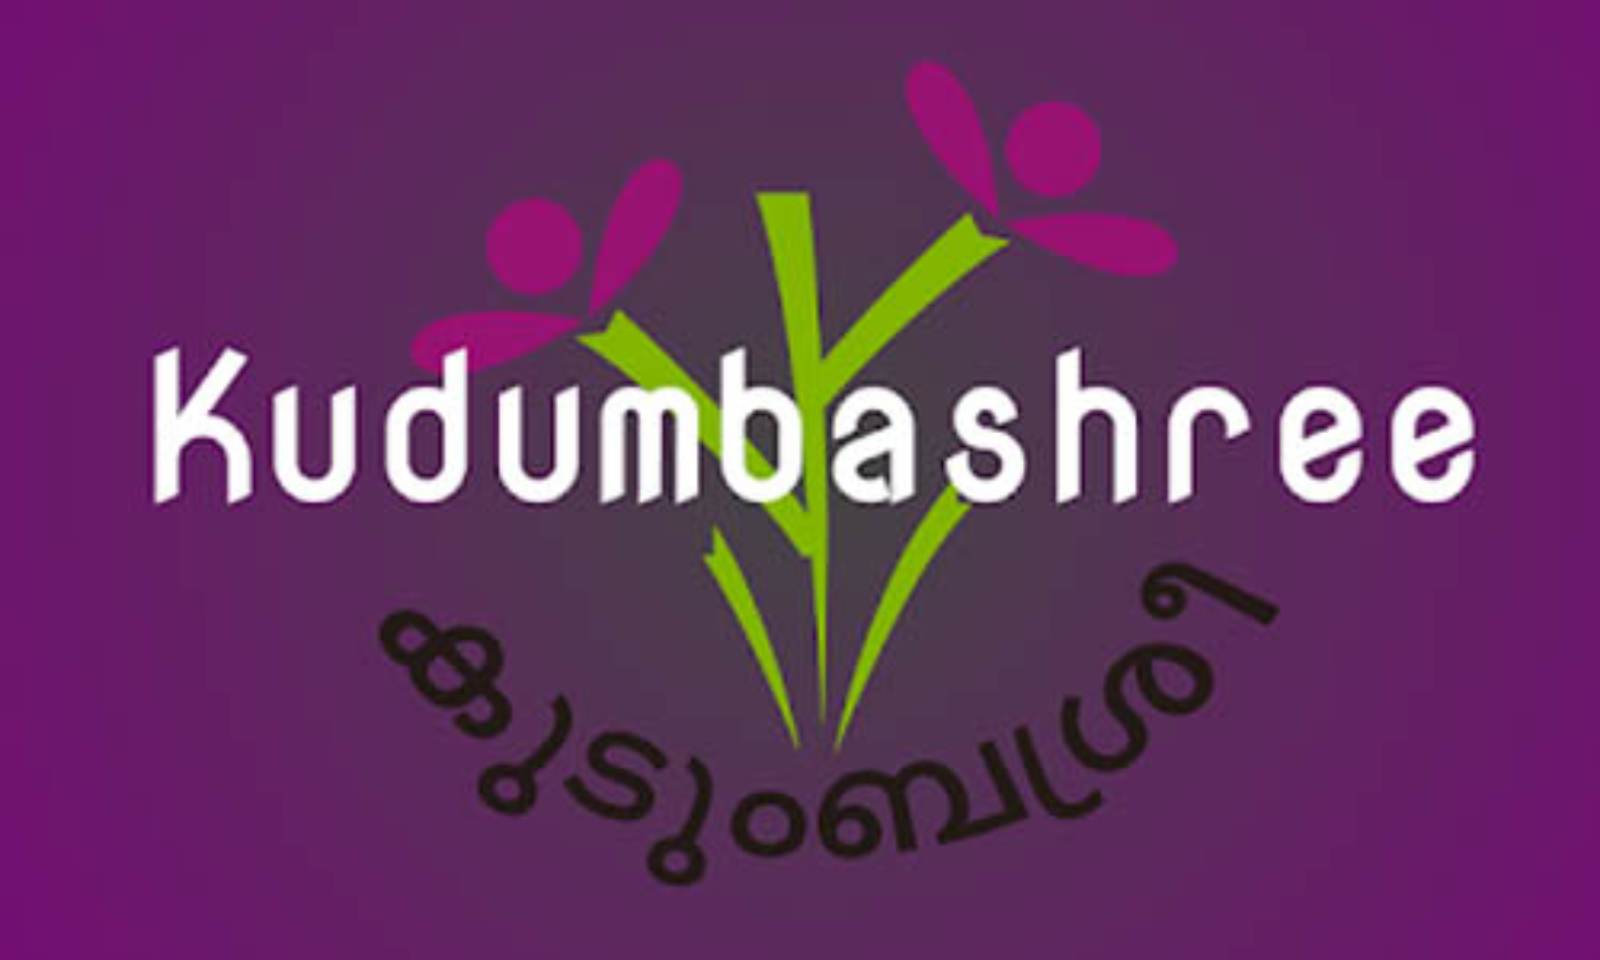 Kudumbashree NRO invites applications for various positions in GSRLM -  Kudumbashree NRO